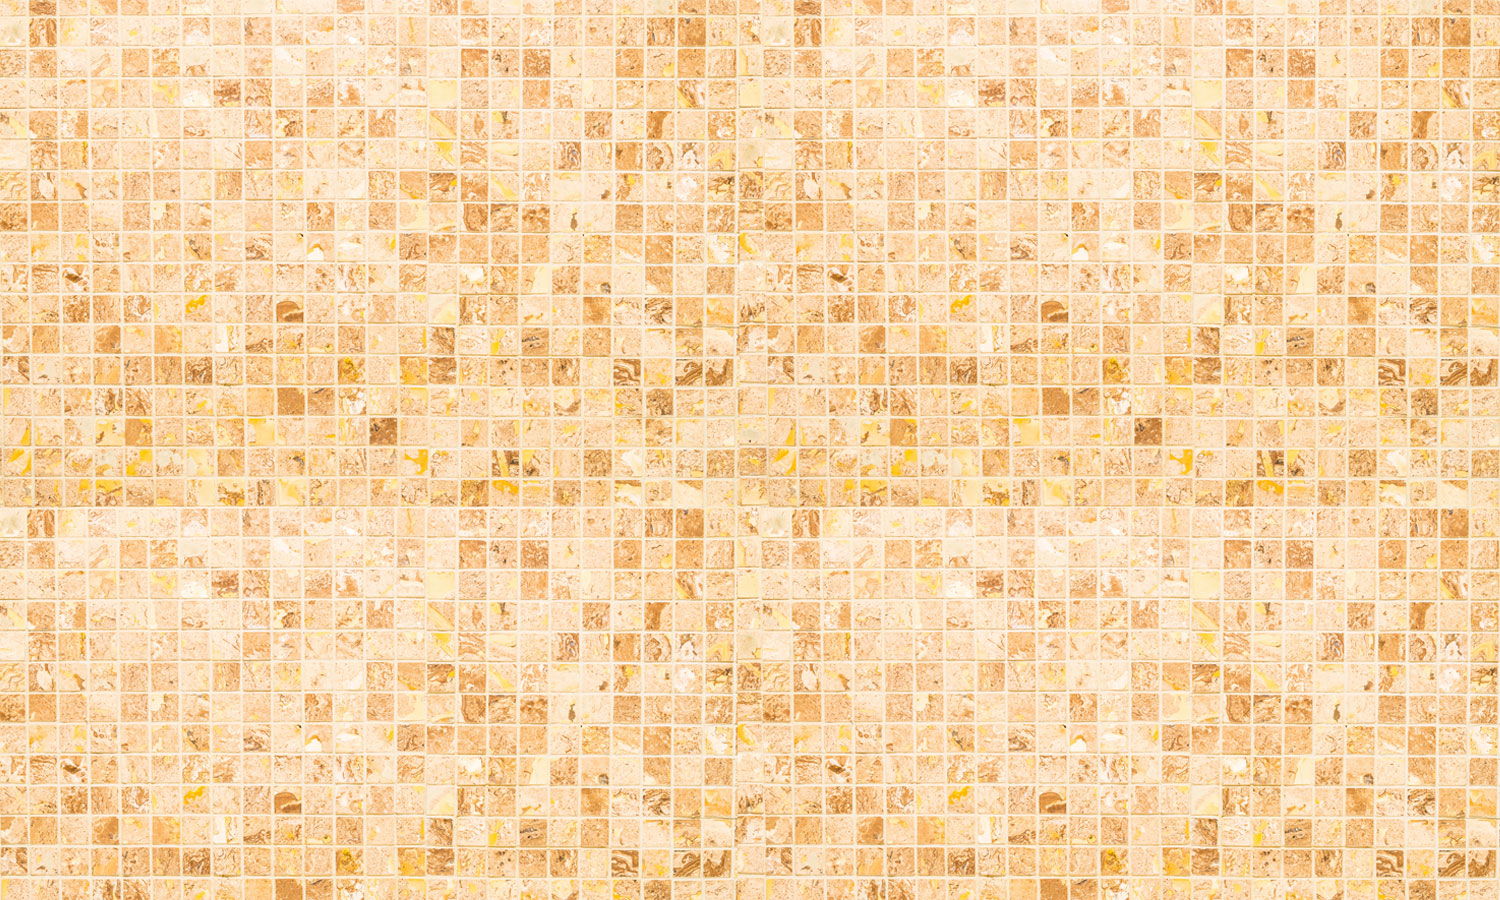 Paneli za kuhinje Tiles wall textures -  Stakleni / PVC ploče / Pleksiglas -  sa printom za kuhinju, Zidne obloge PKU116